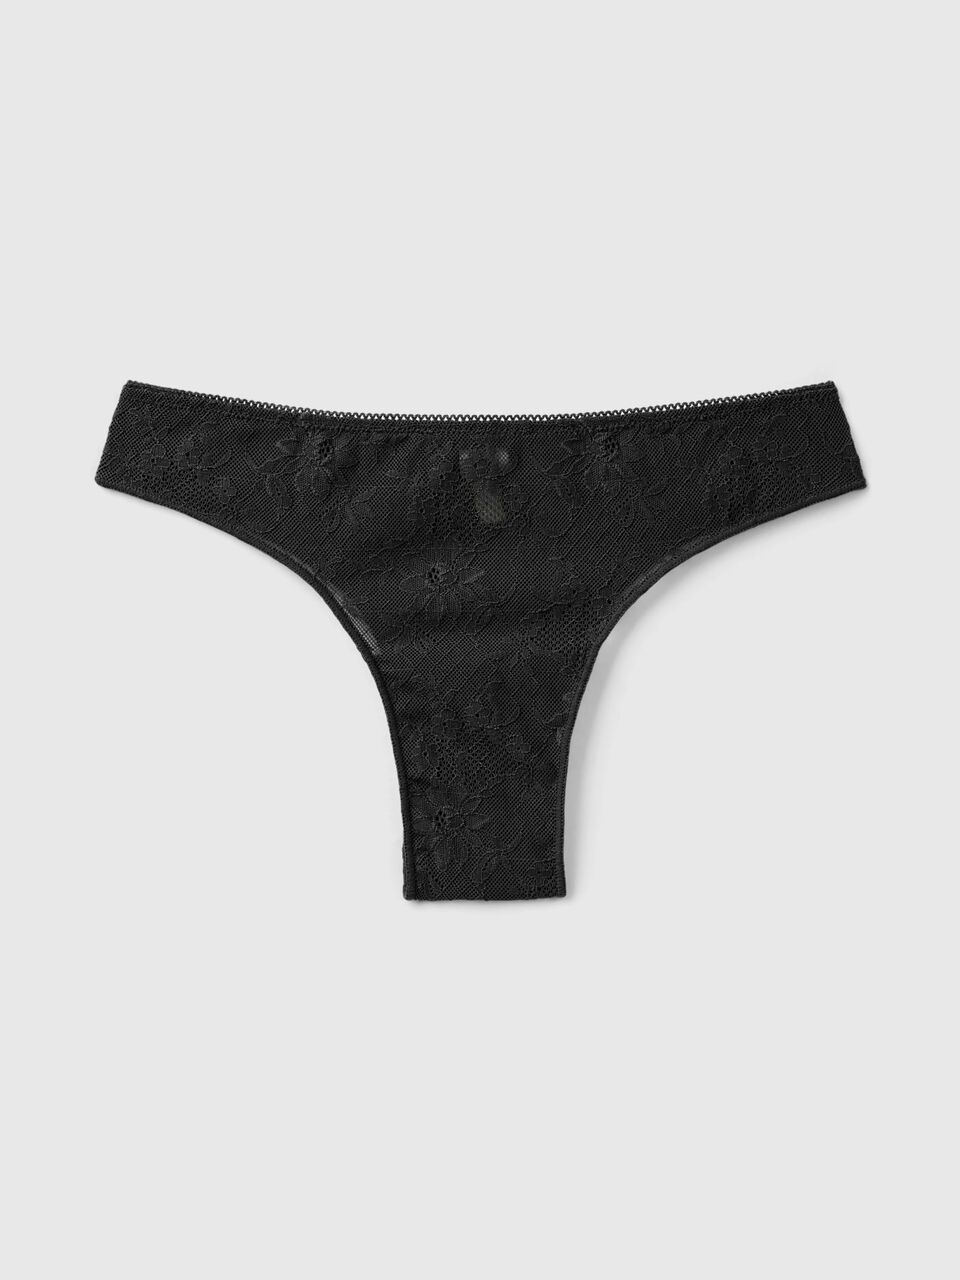 Black microfibre and lace Brazilian panty